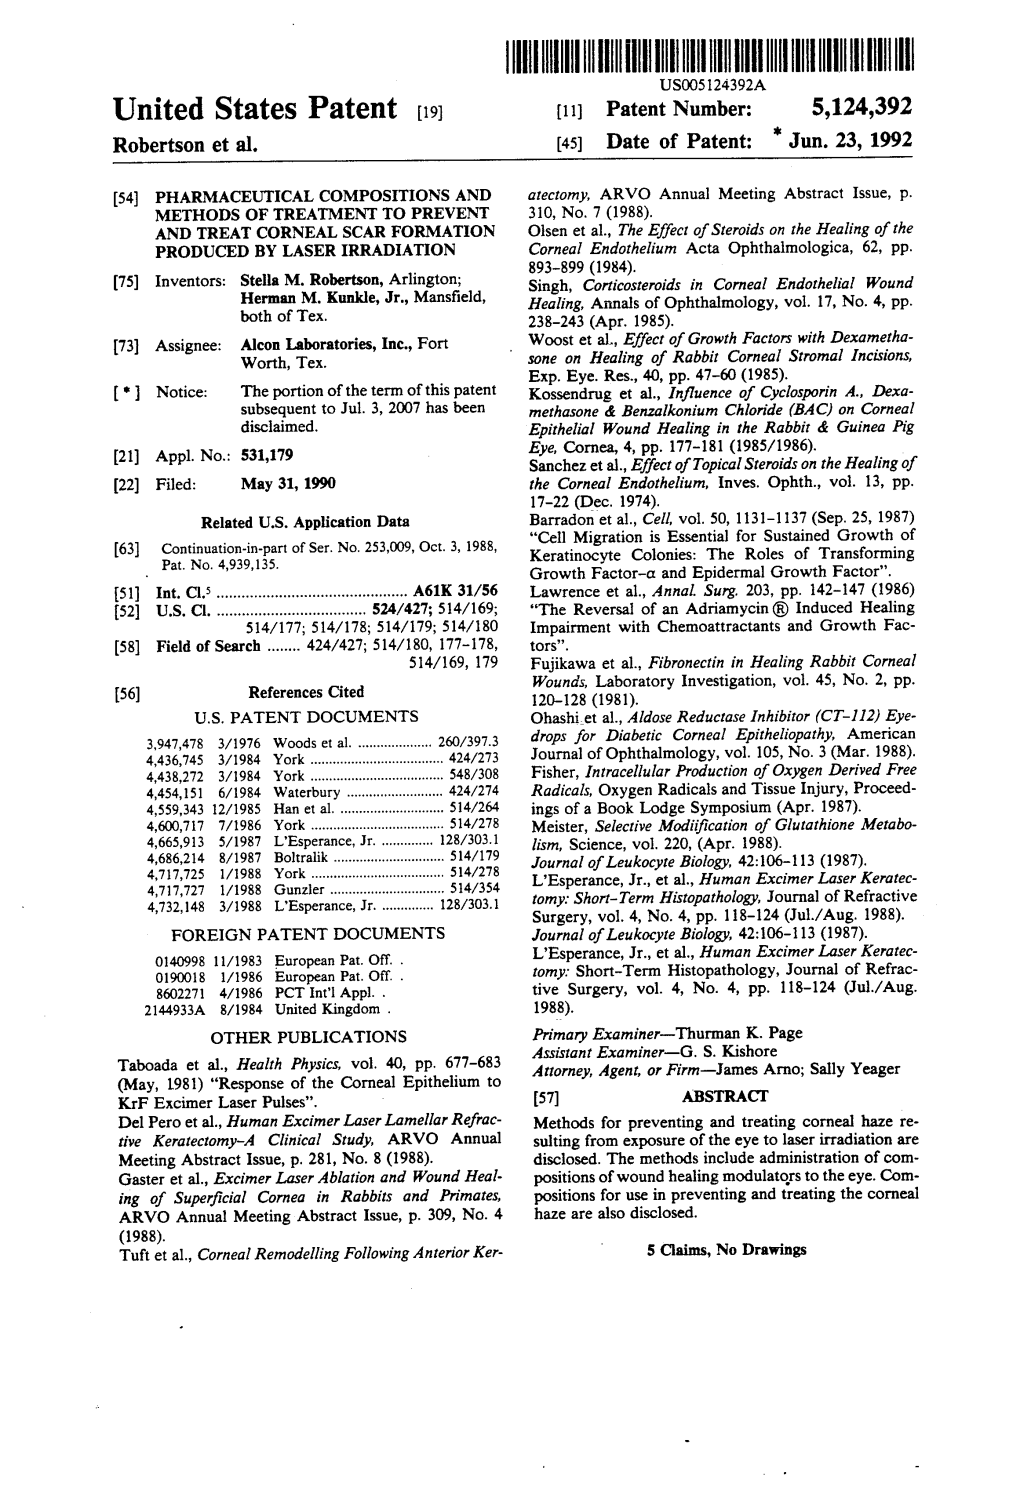 United States Patent (19) 11 Patent Number: 5,124,392 Robertson Et Al